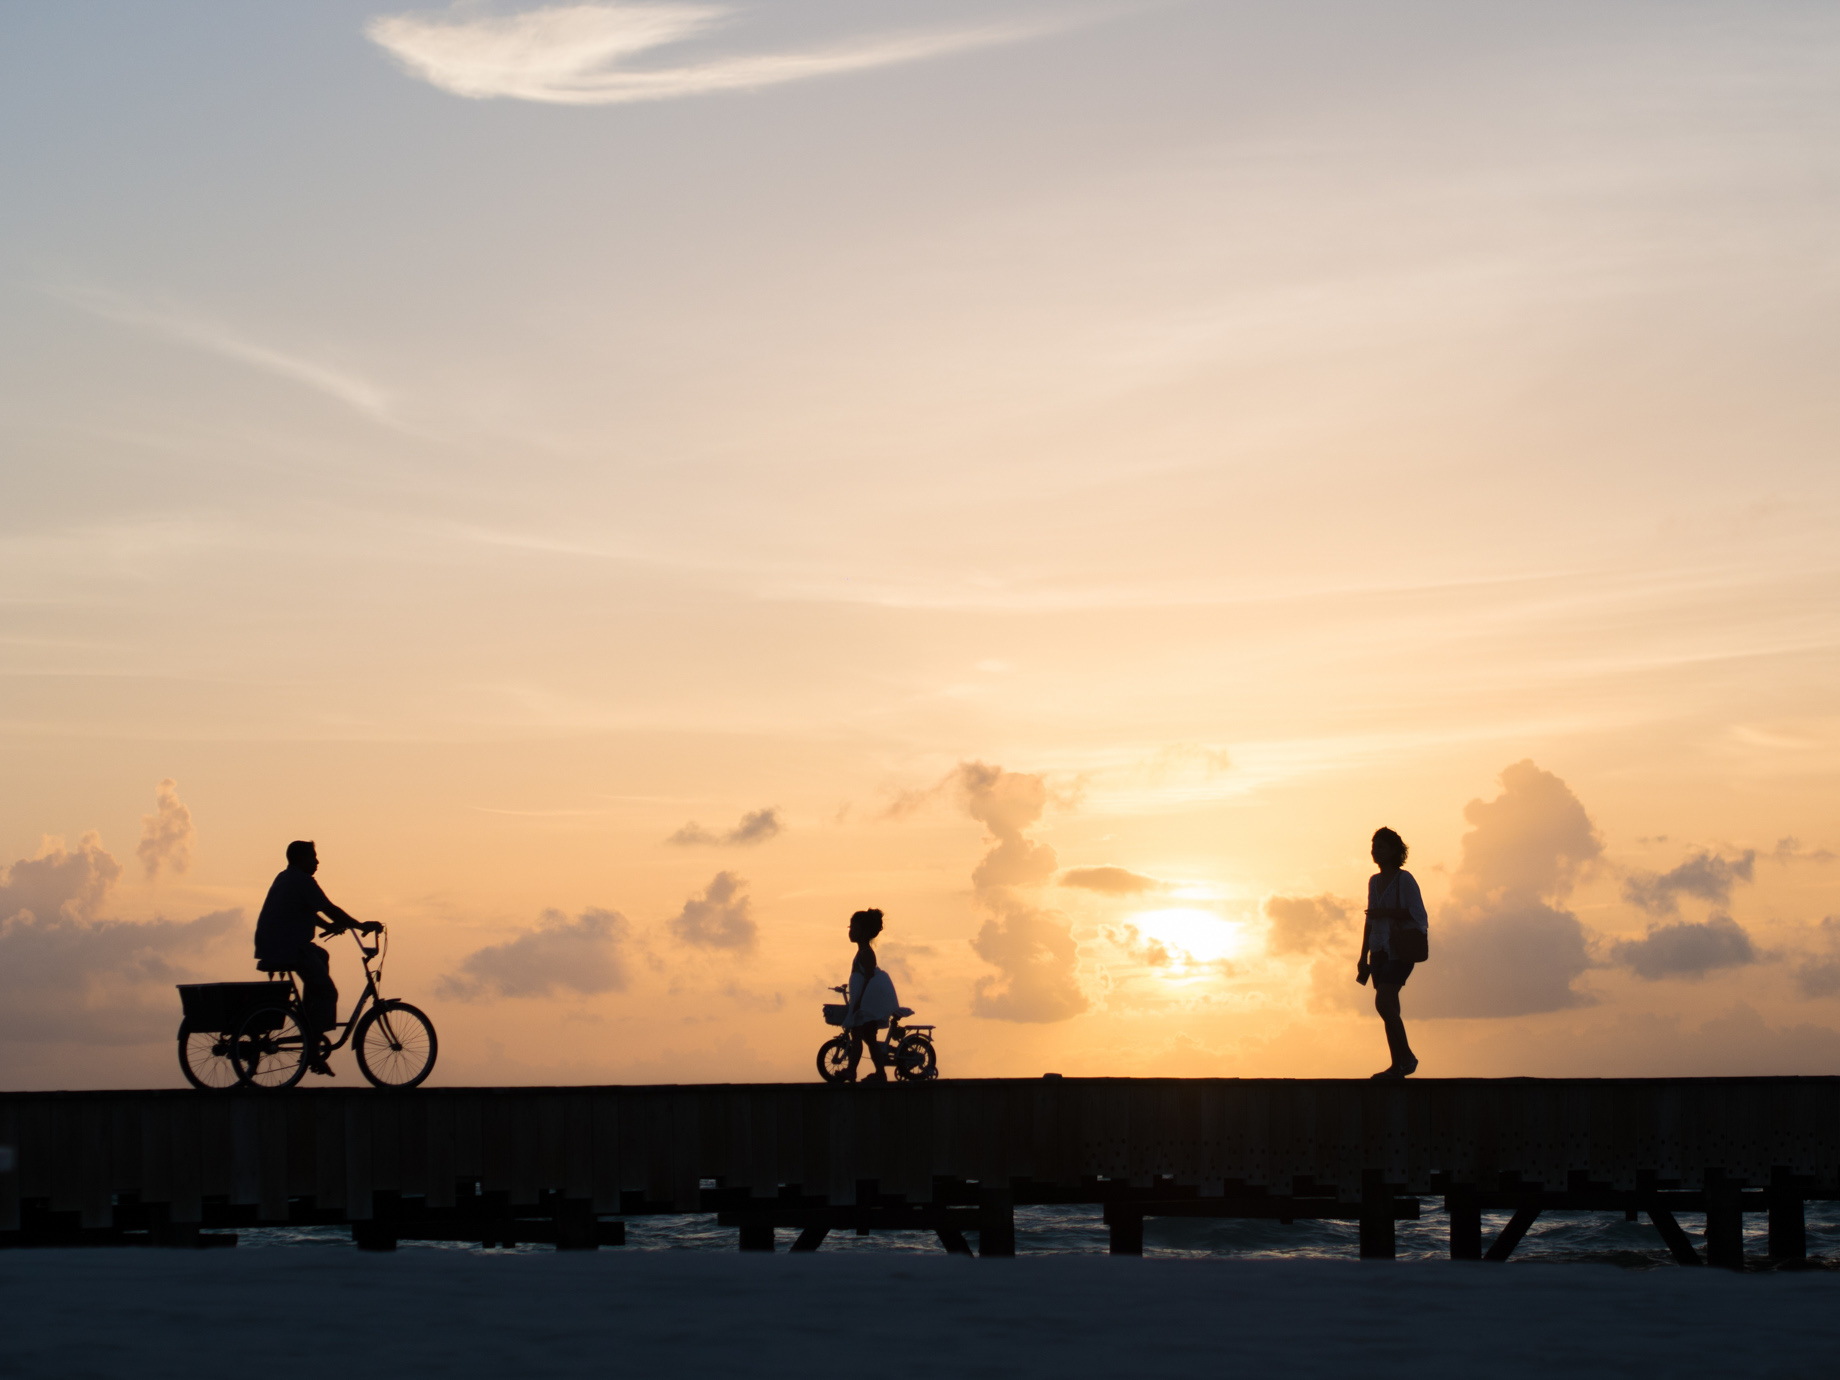 Soneva Jani Resort – Noonu Atoll, Medhufaru, Maldives – Overwater Boardwalk Sunset